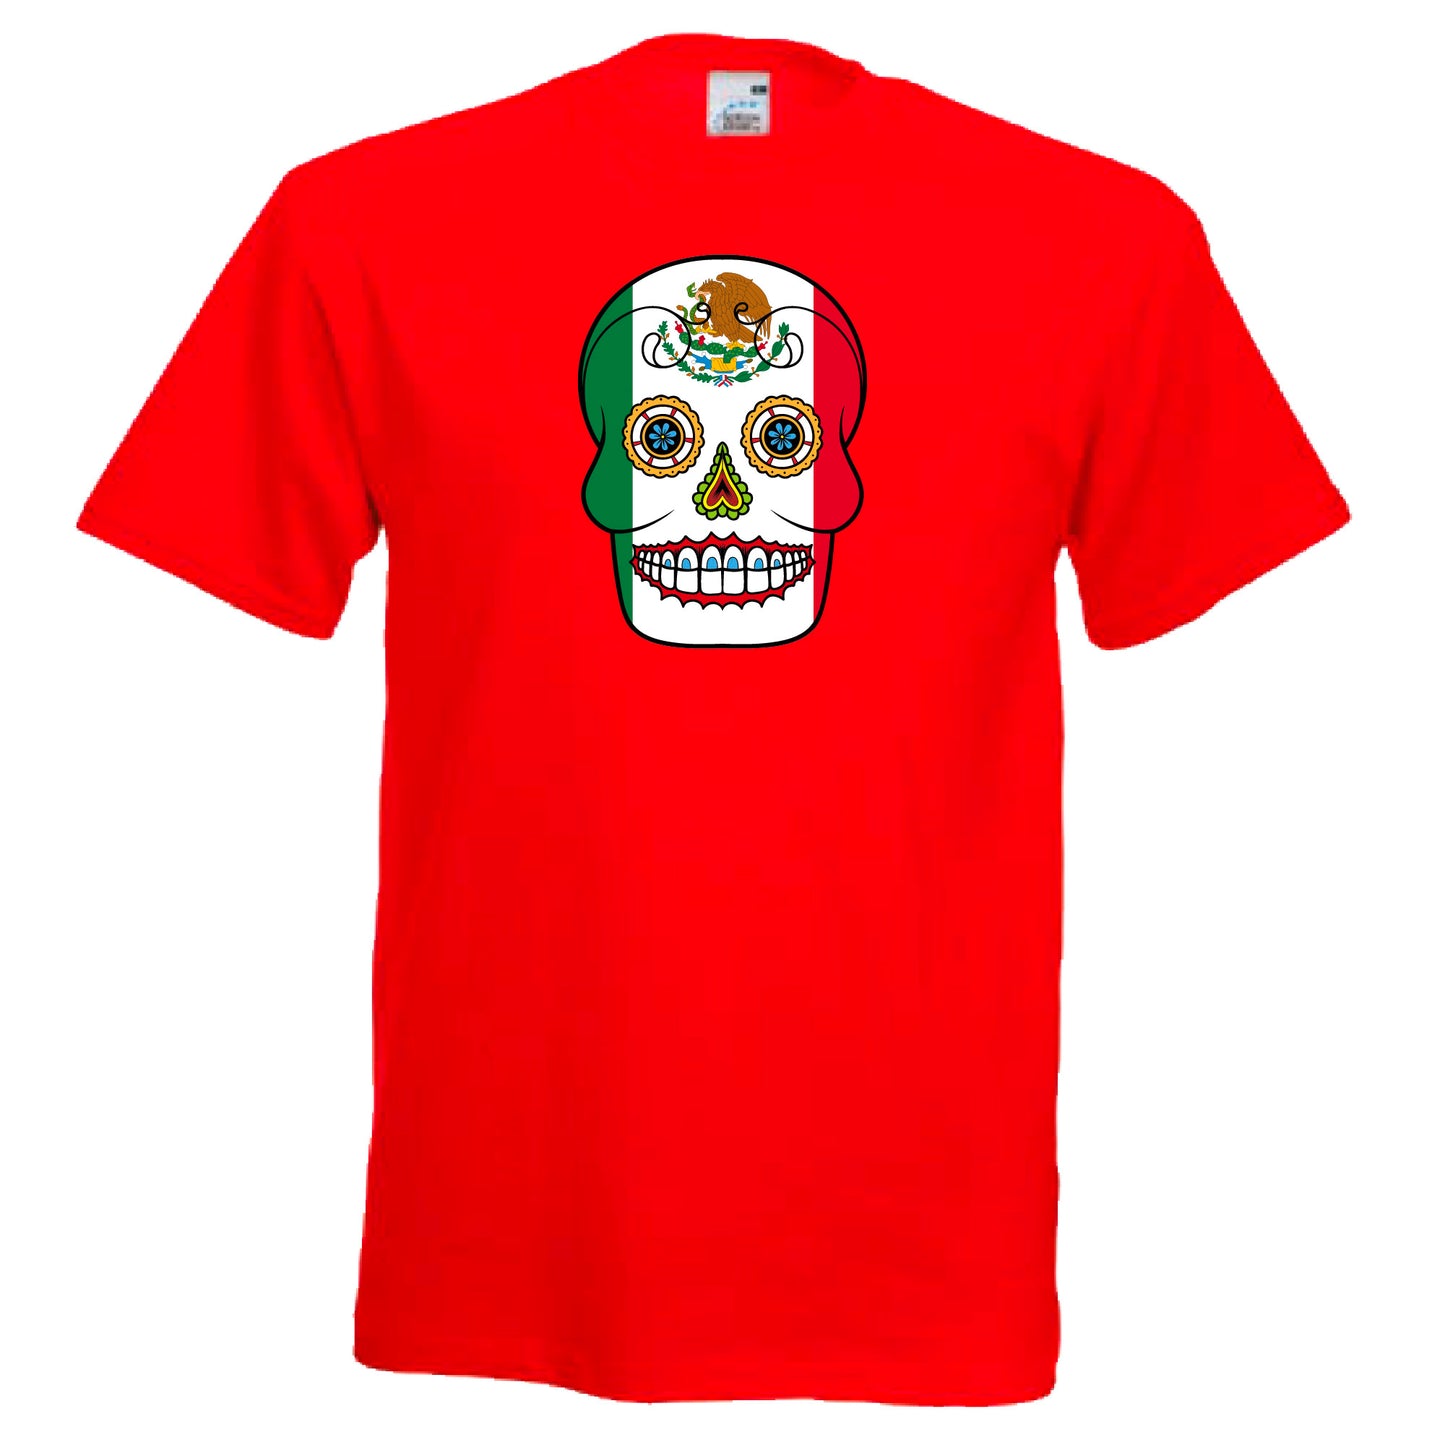 INDIGOS UG - T-Shirt Herren - Mexiko - Skull - Fussball